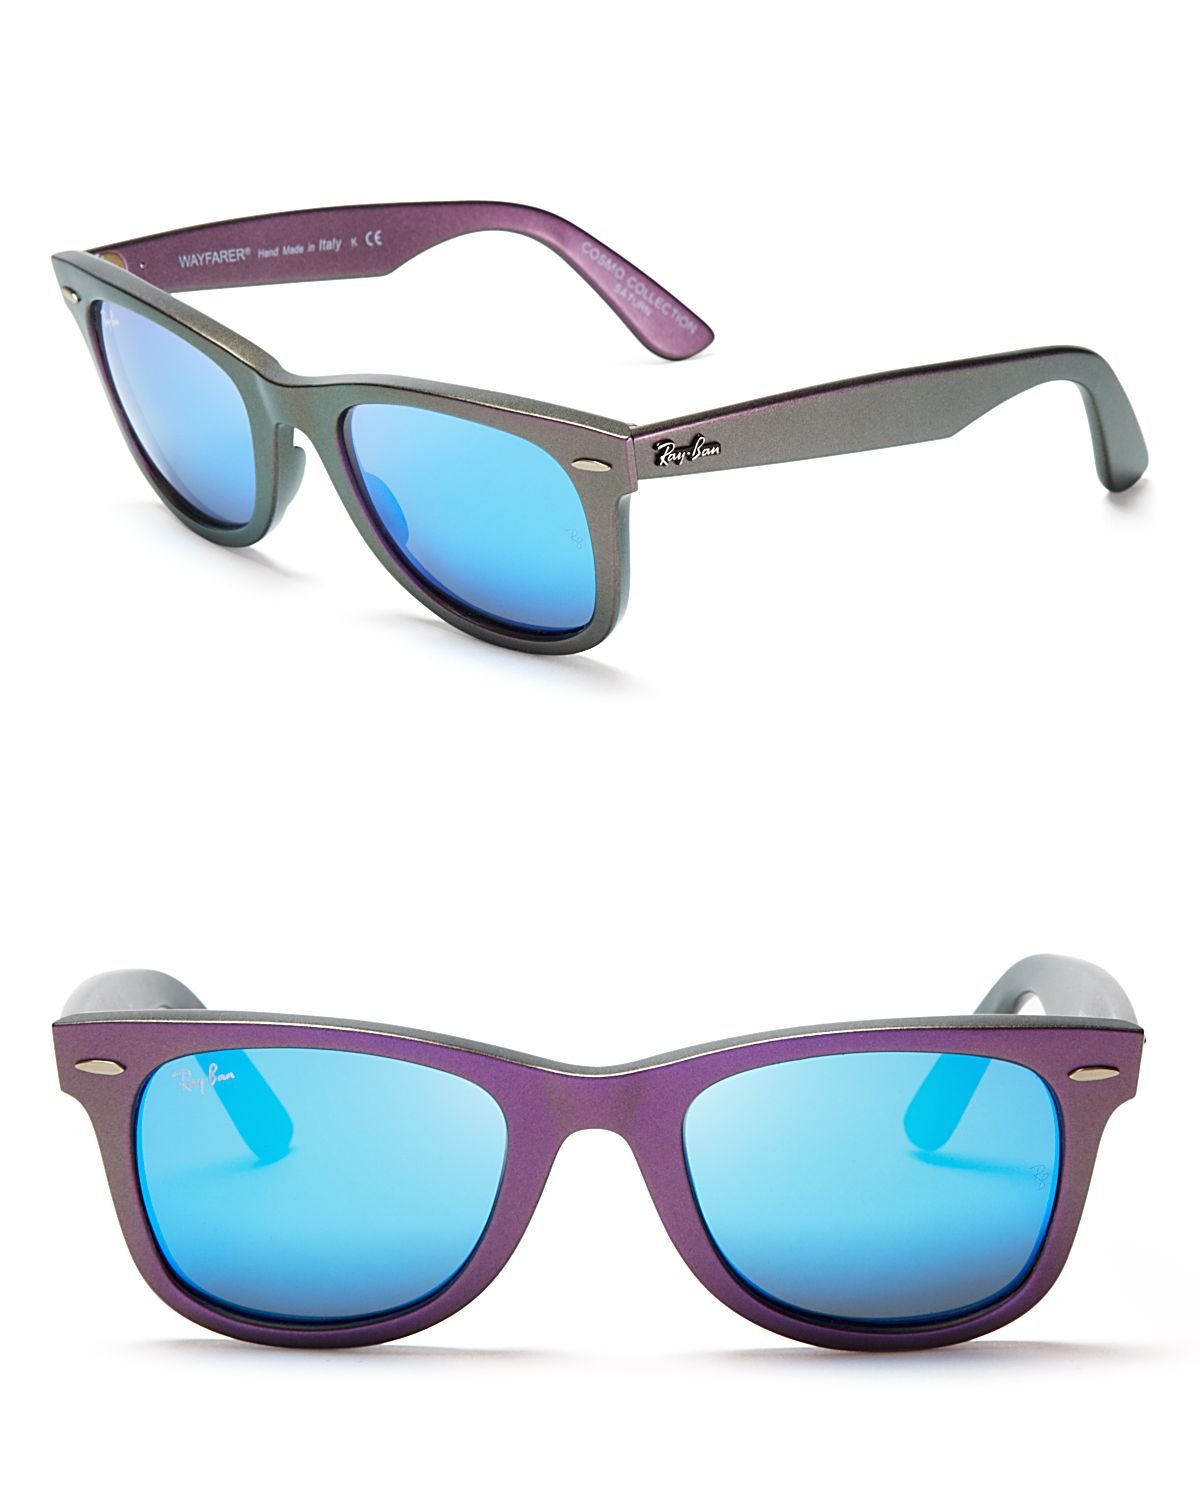 Ray-Ban Iridescent Mirrored Wayfarer Sunglasses in Blue for Men - Lyst